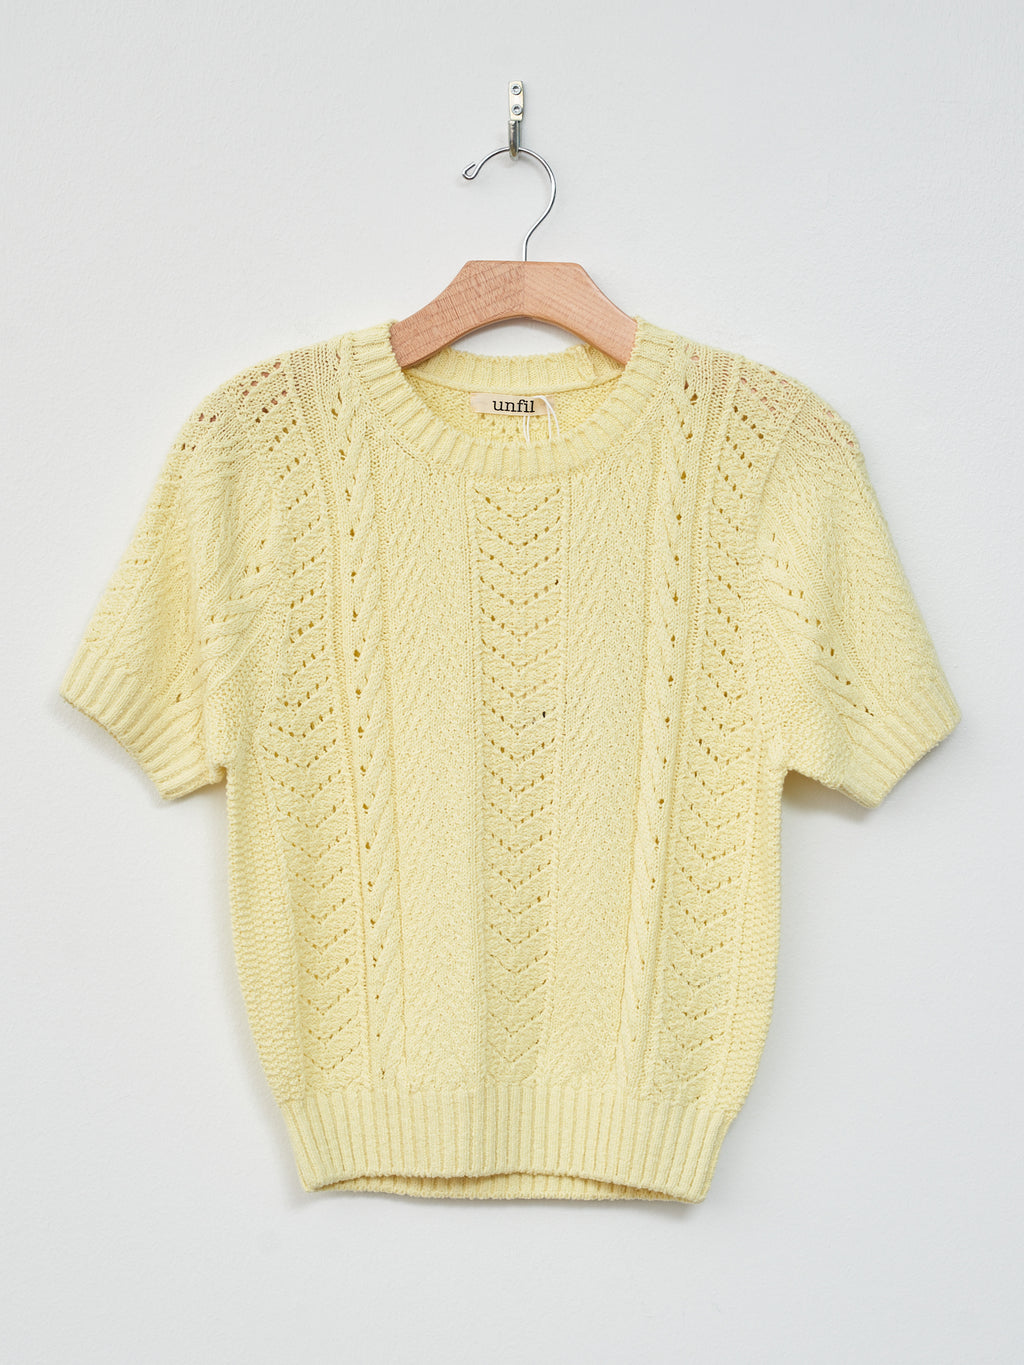 Namu Shop - Unfil Open Work Cable Knit Sweater - Cream Yellow